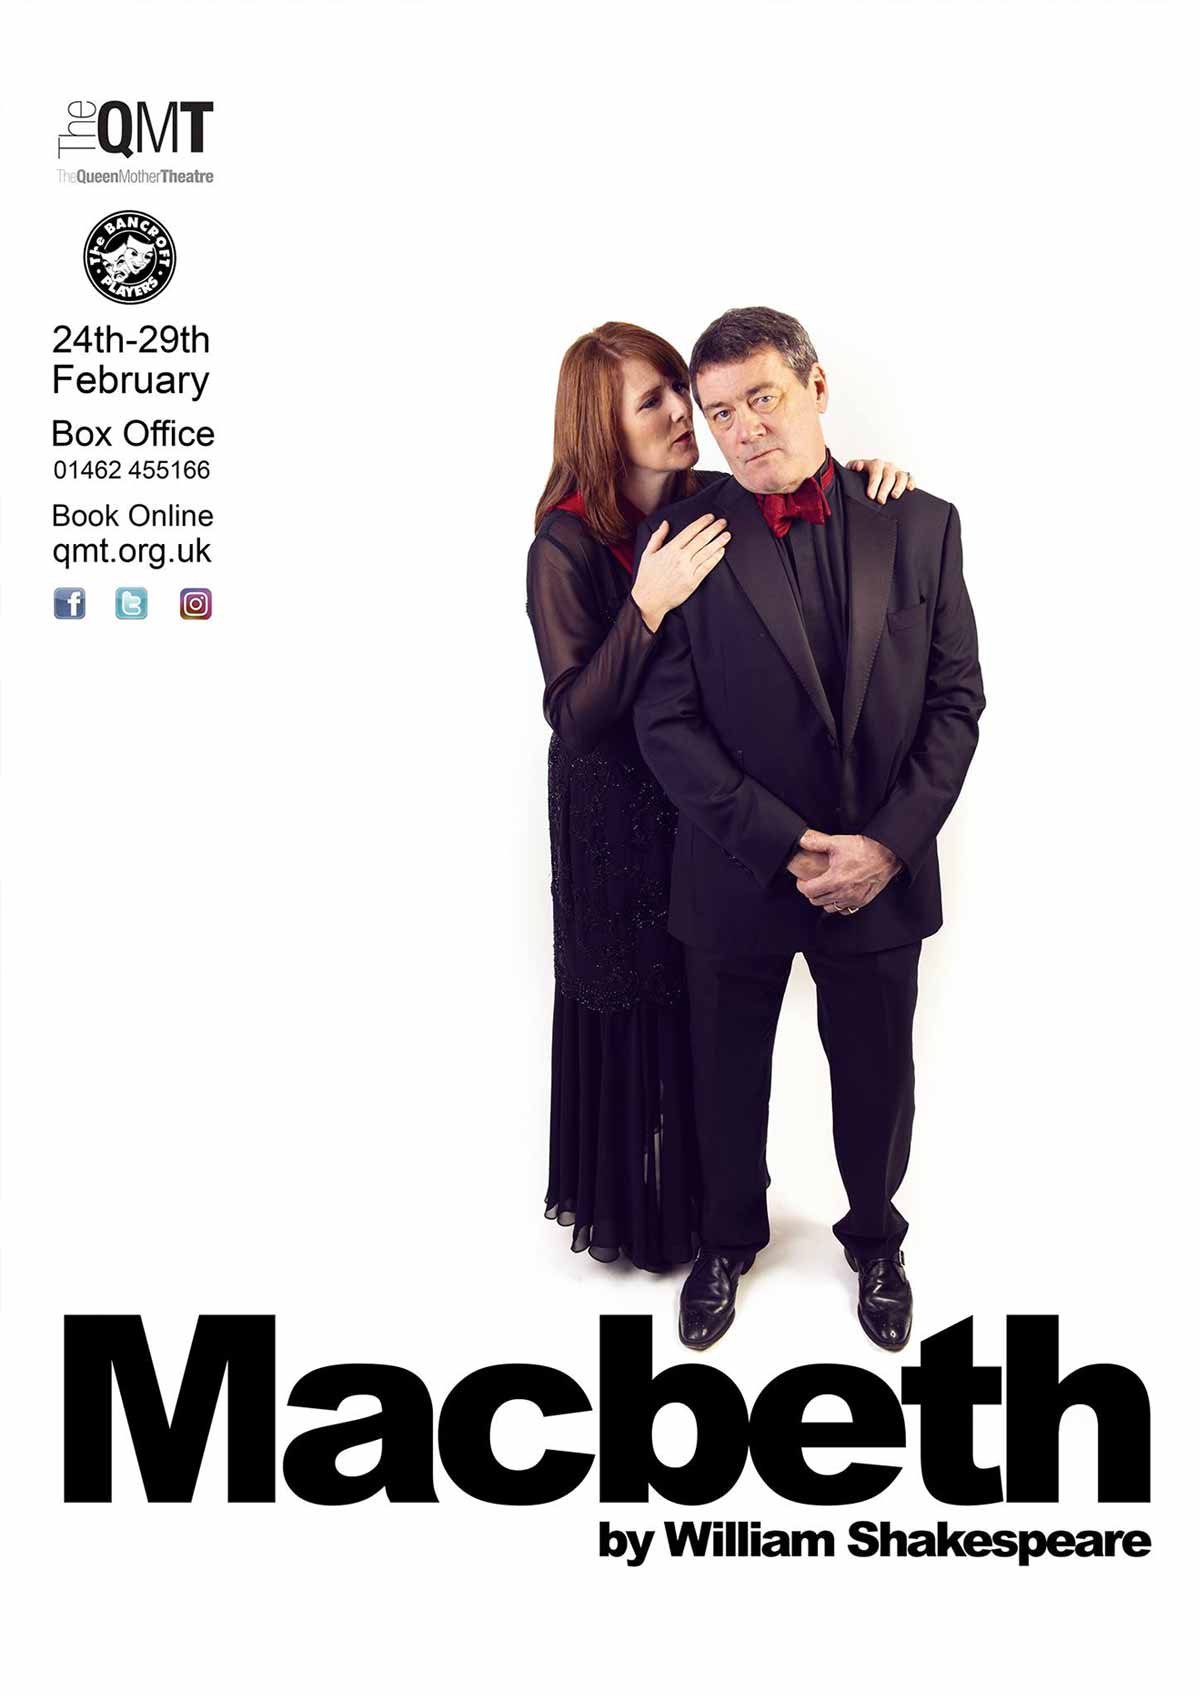 MacBeth Poster Image